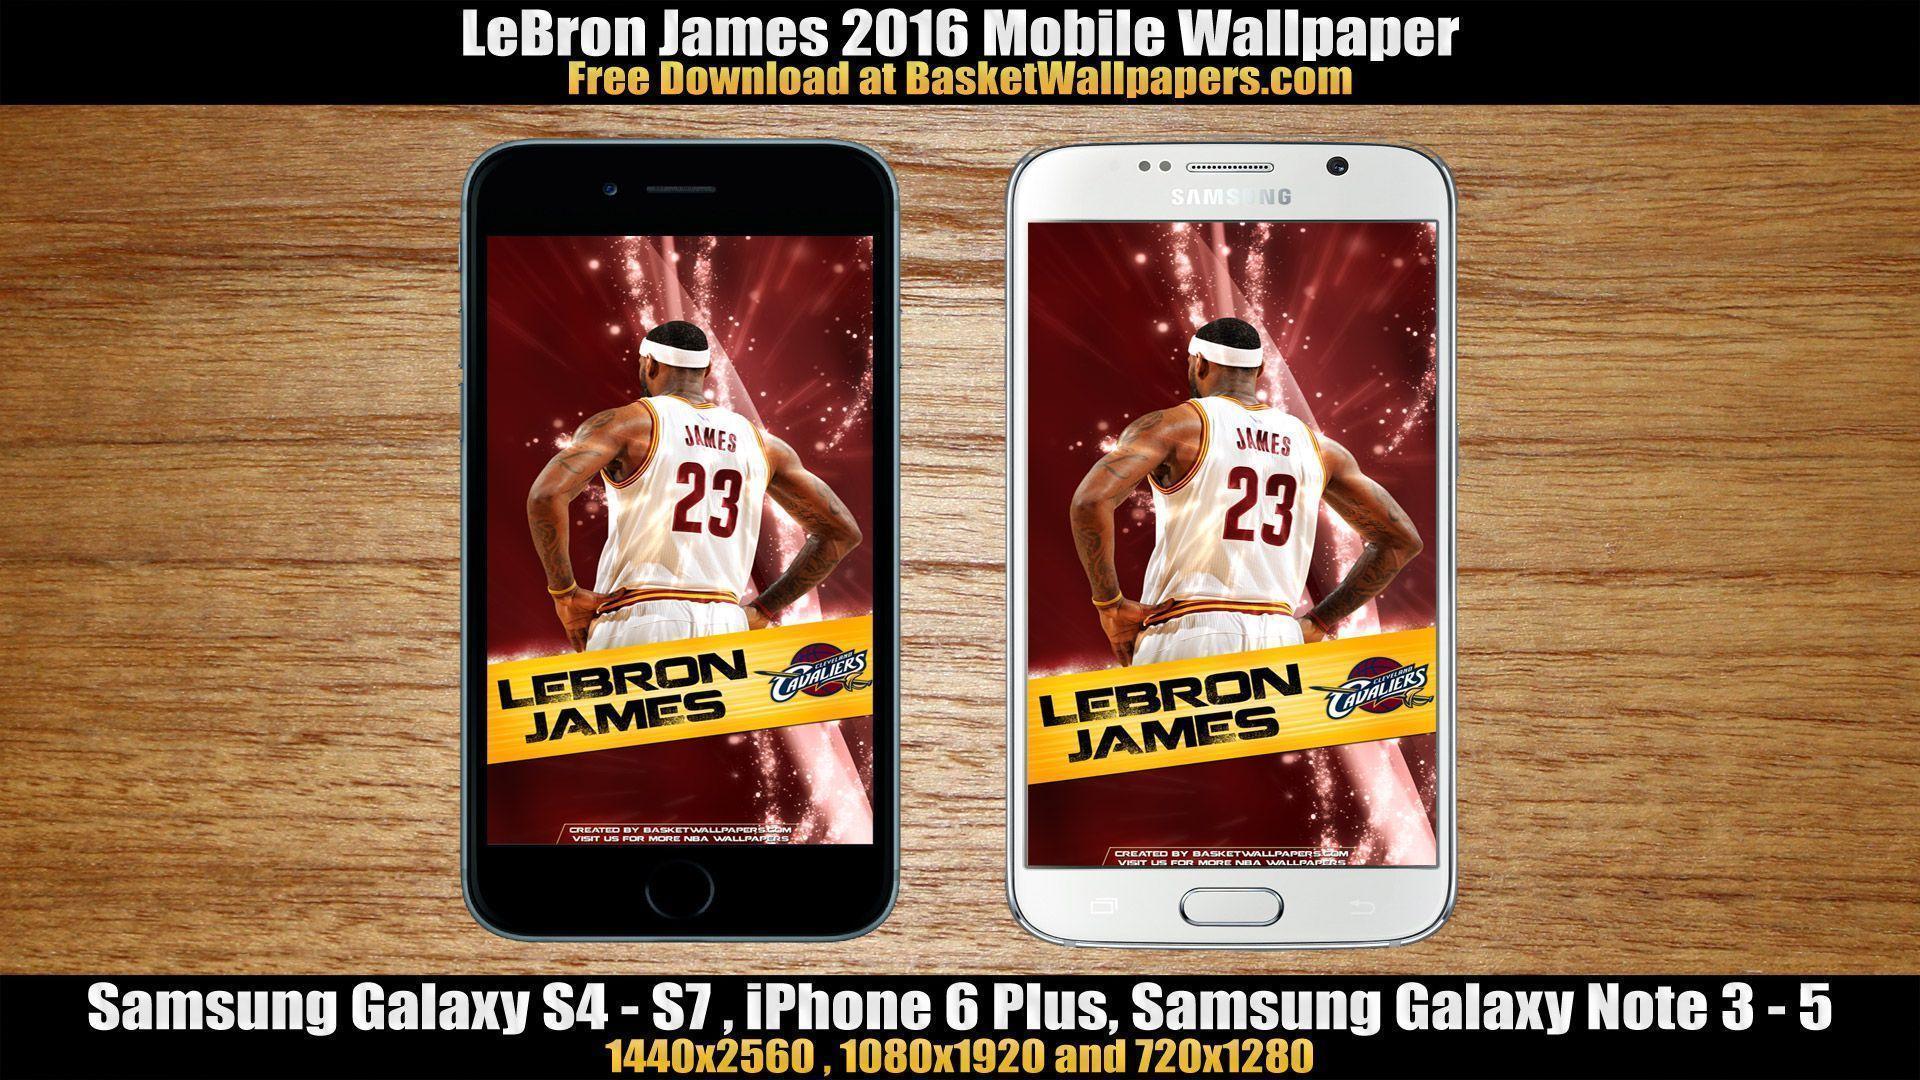 LeBron James Cleveland Cavaliers 2016 Mobile Wallpaper